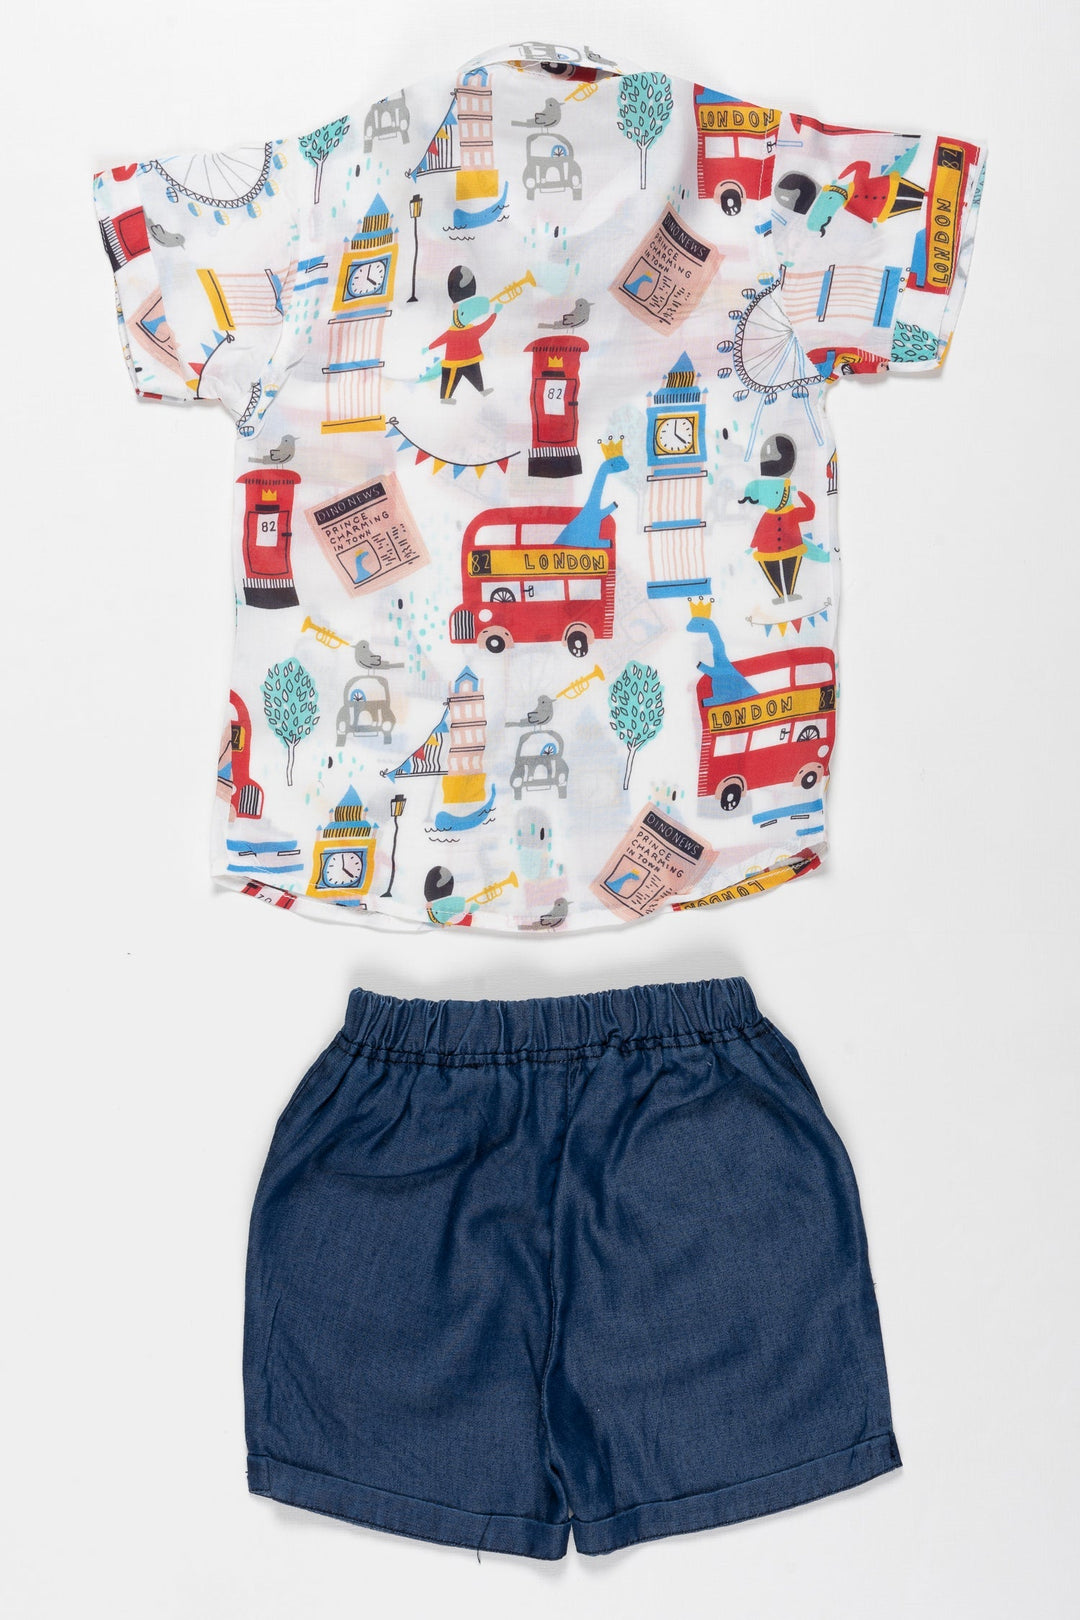 The Nesavu Boys Casual Set Boys Playful London-Themed Shirt & Shorts Set - Vibrant Summer Outfit Nesavu Shop Boys London Print Shirt & Navy Shorts | Fun & Casual Summer Set | The Nesavu